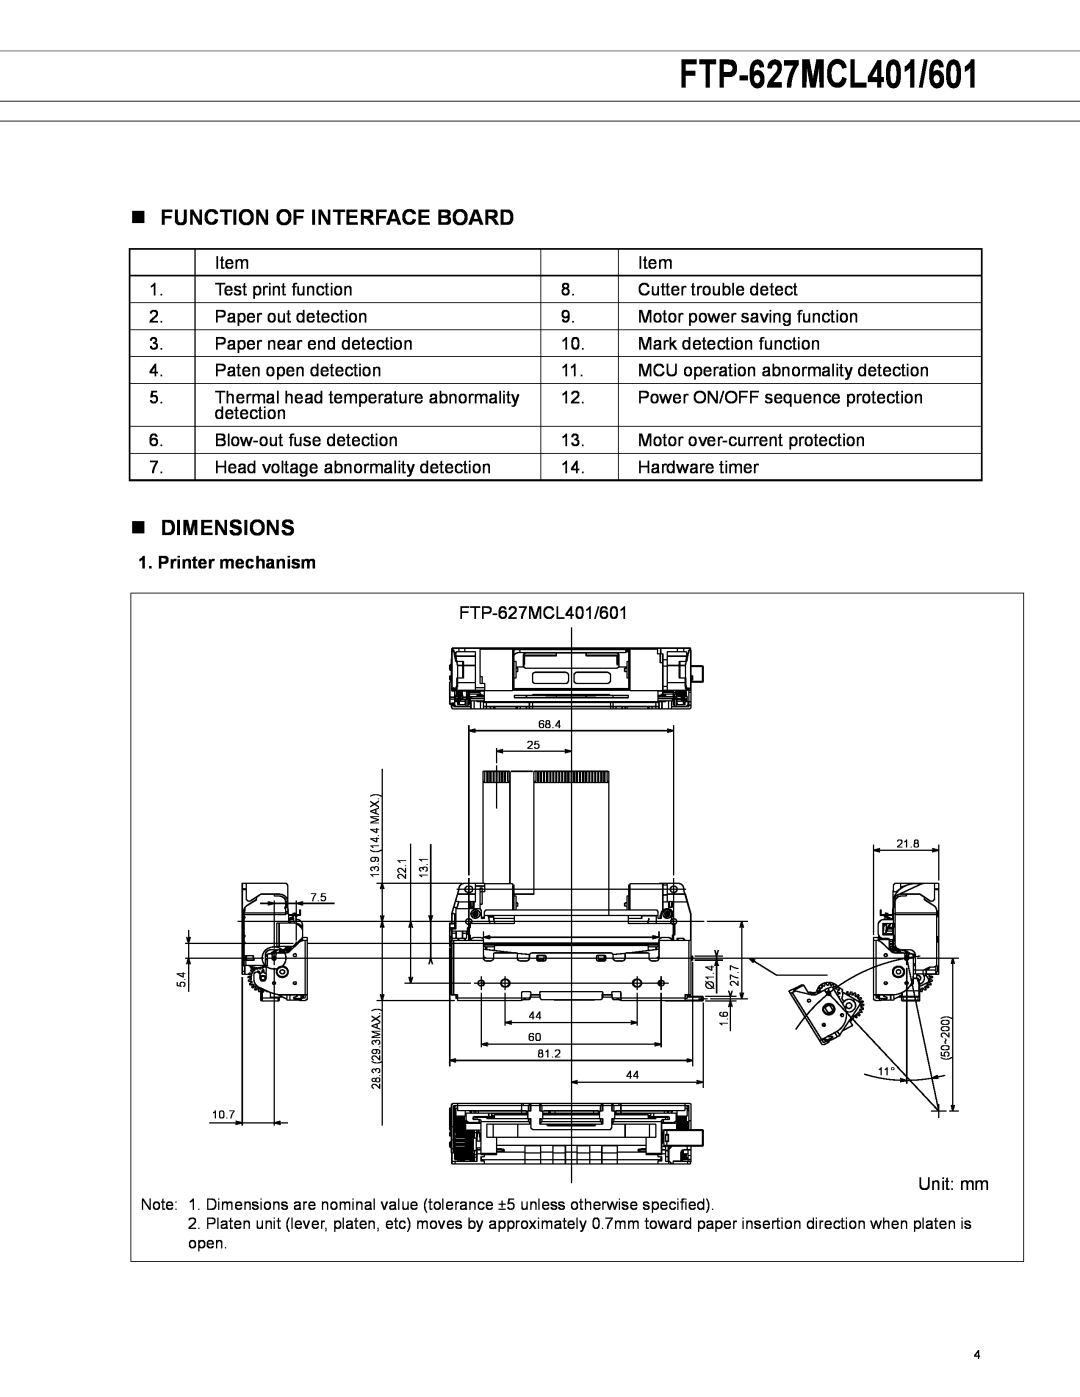 Fujitsu FTP-607 Series manual n function of interface board, n dimensions, Printer mechanism, FTP-627MCL401/601 